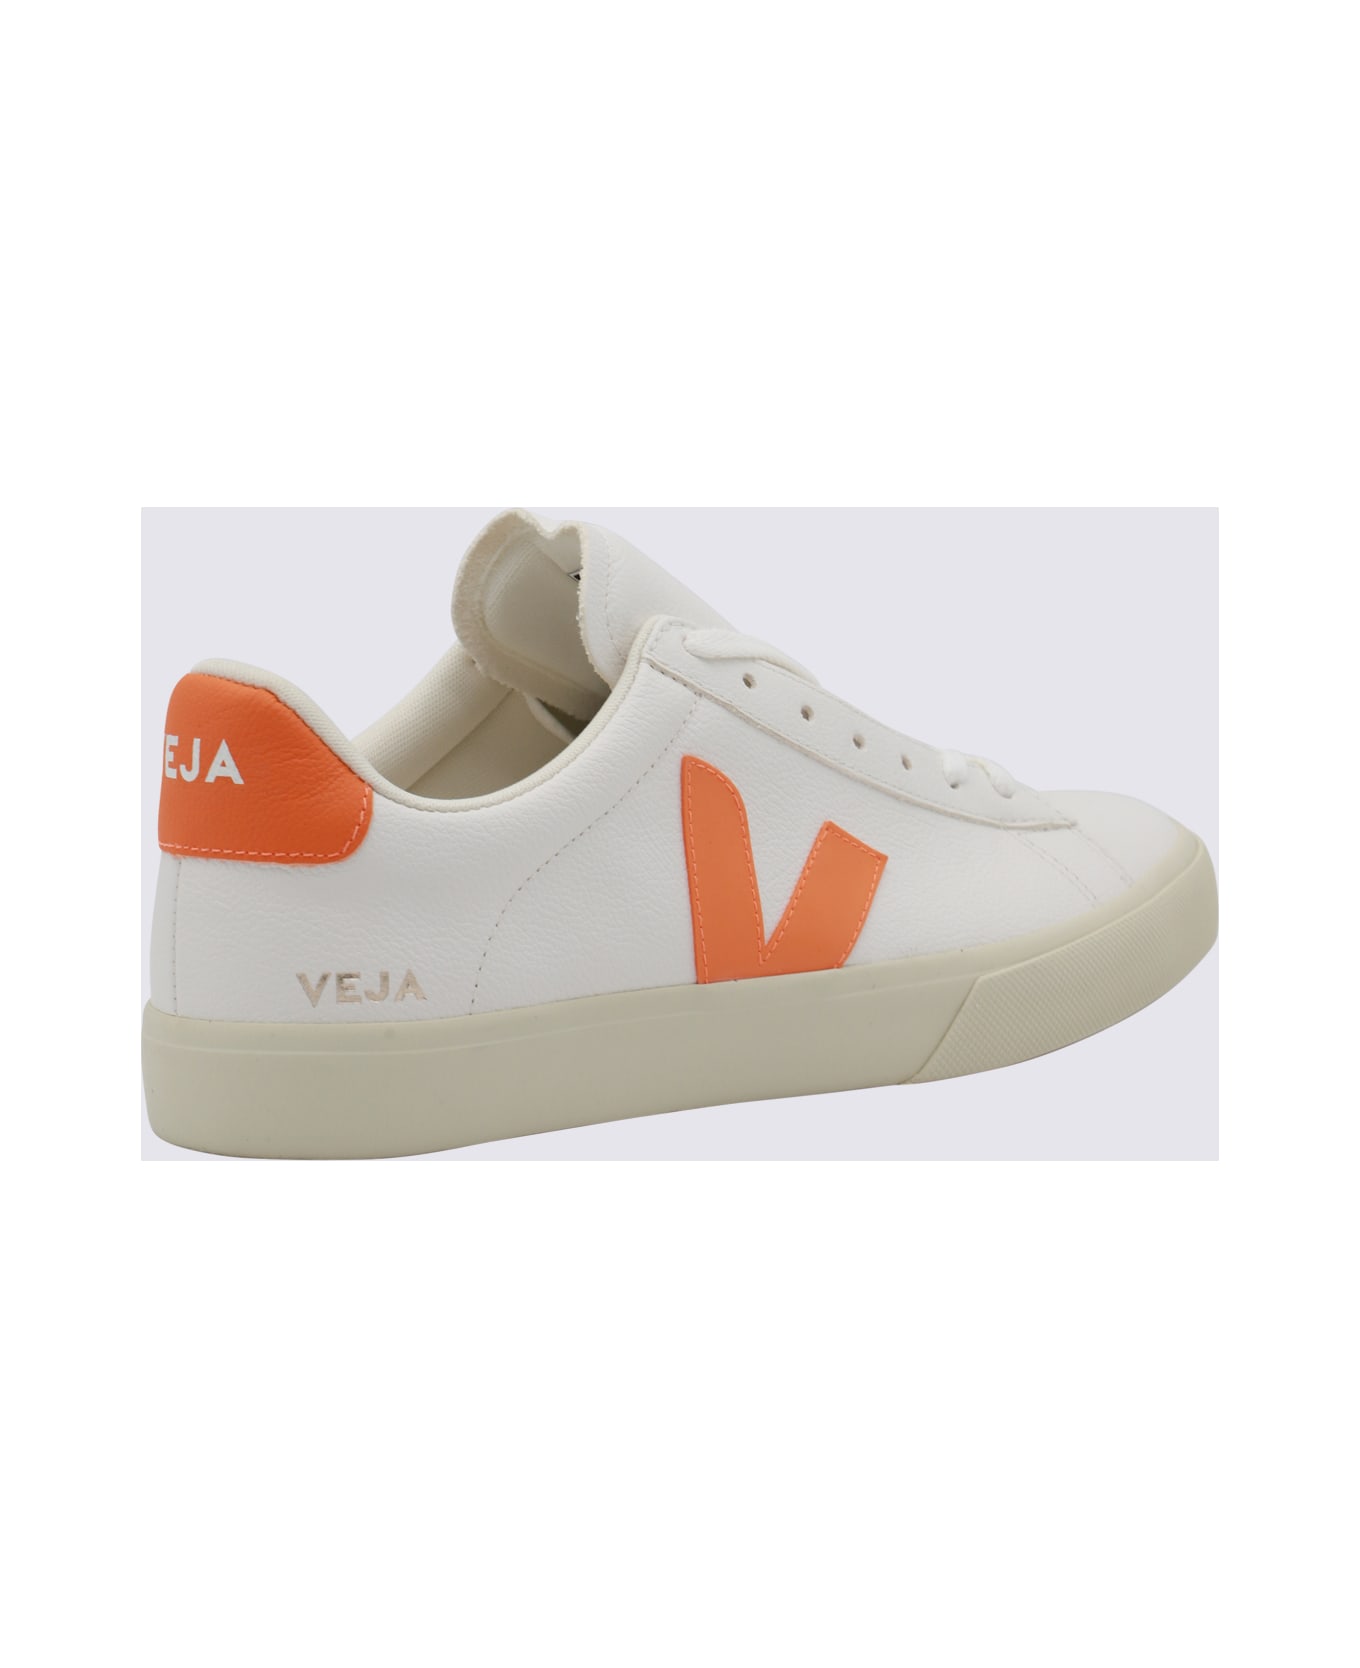 Veja White And Orange Leather Campo Sneakers - EXTRA-WHITE FURY